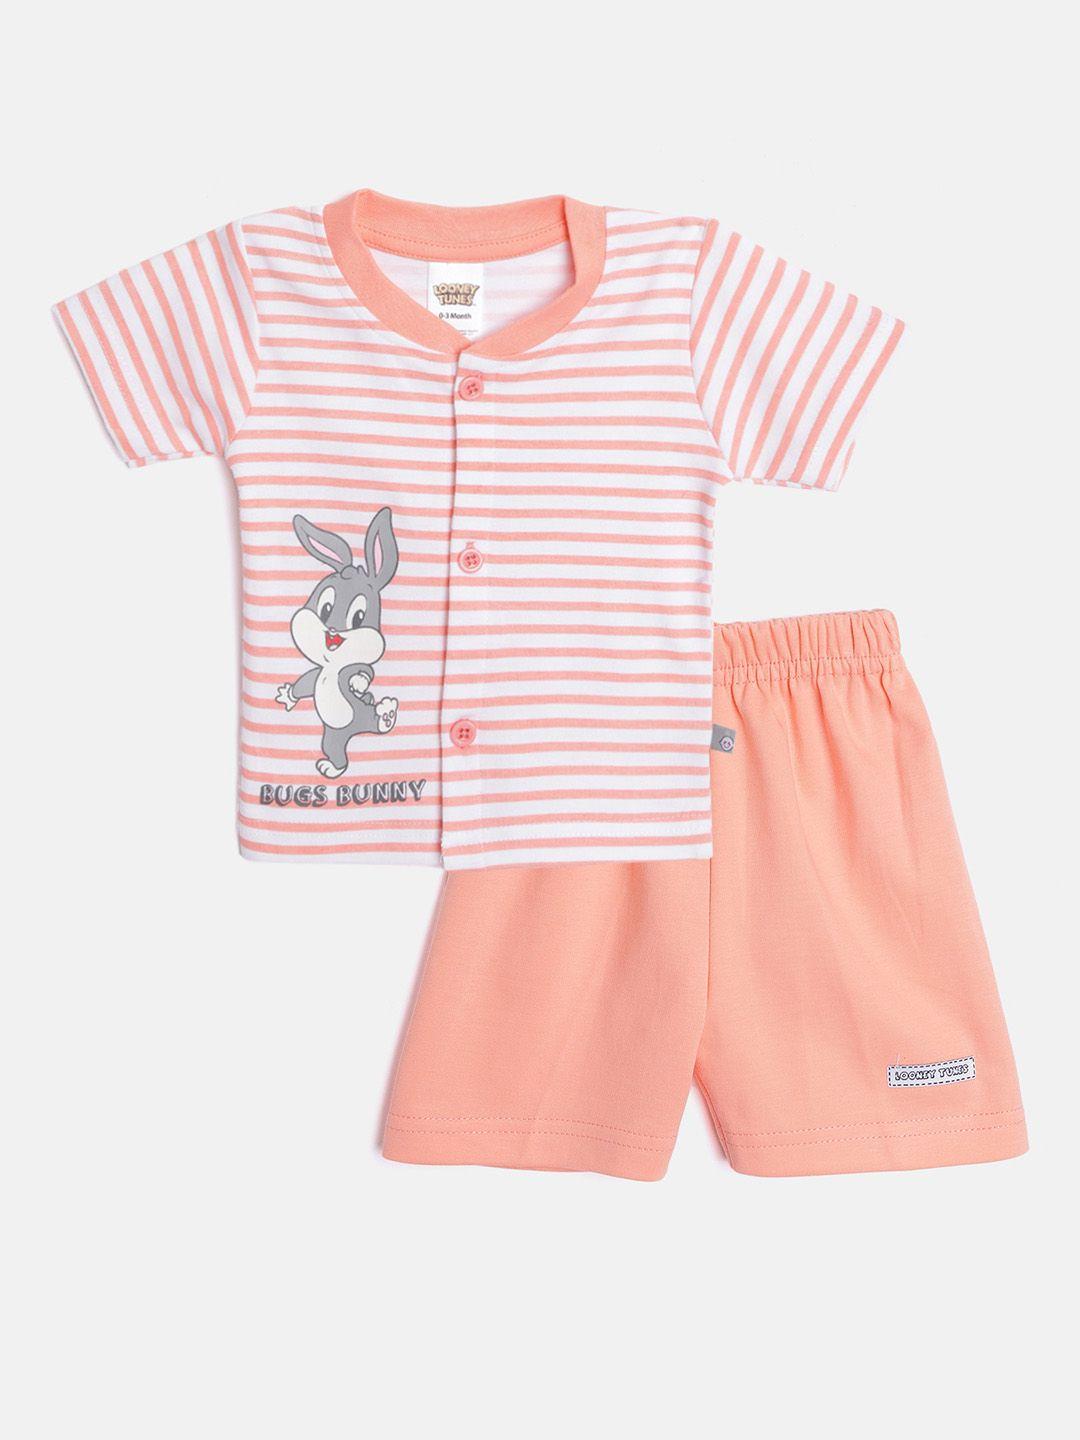 tinyo infant white & peach-coloured striped & bugs bunny print cotton clothing set